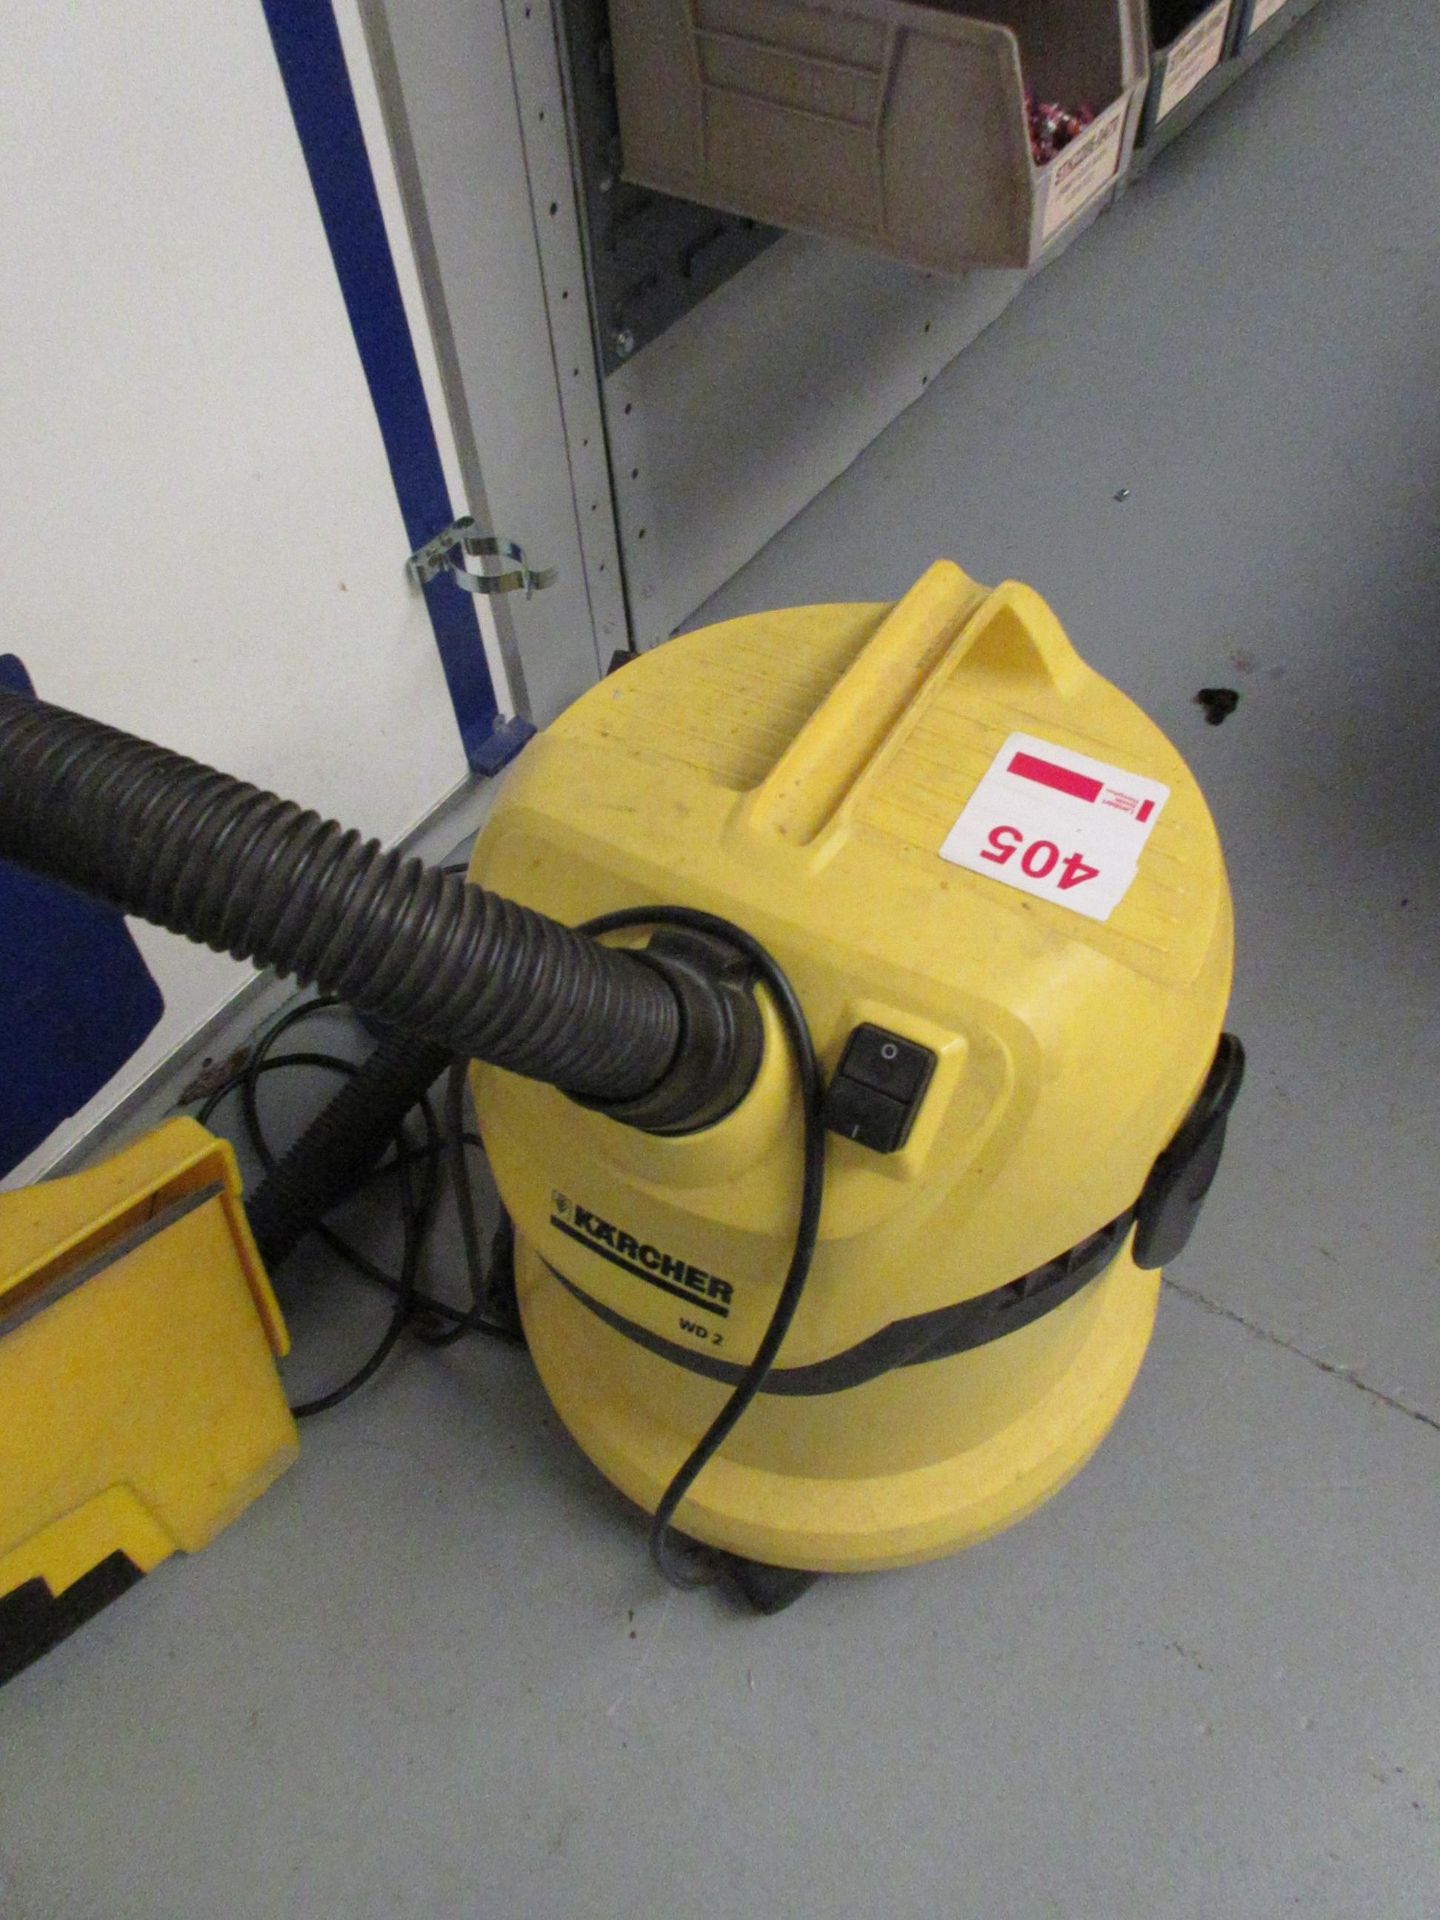 Karcher WD2 wet & dry vacuum, serial no. 154361